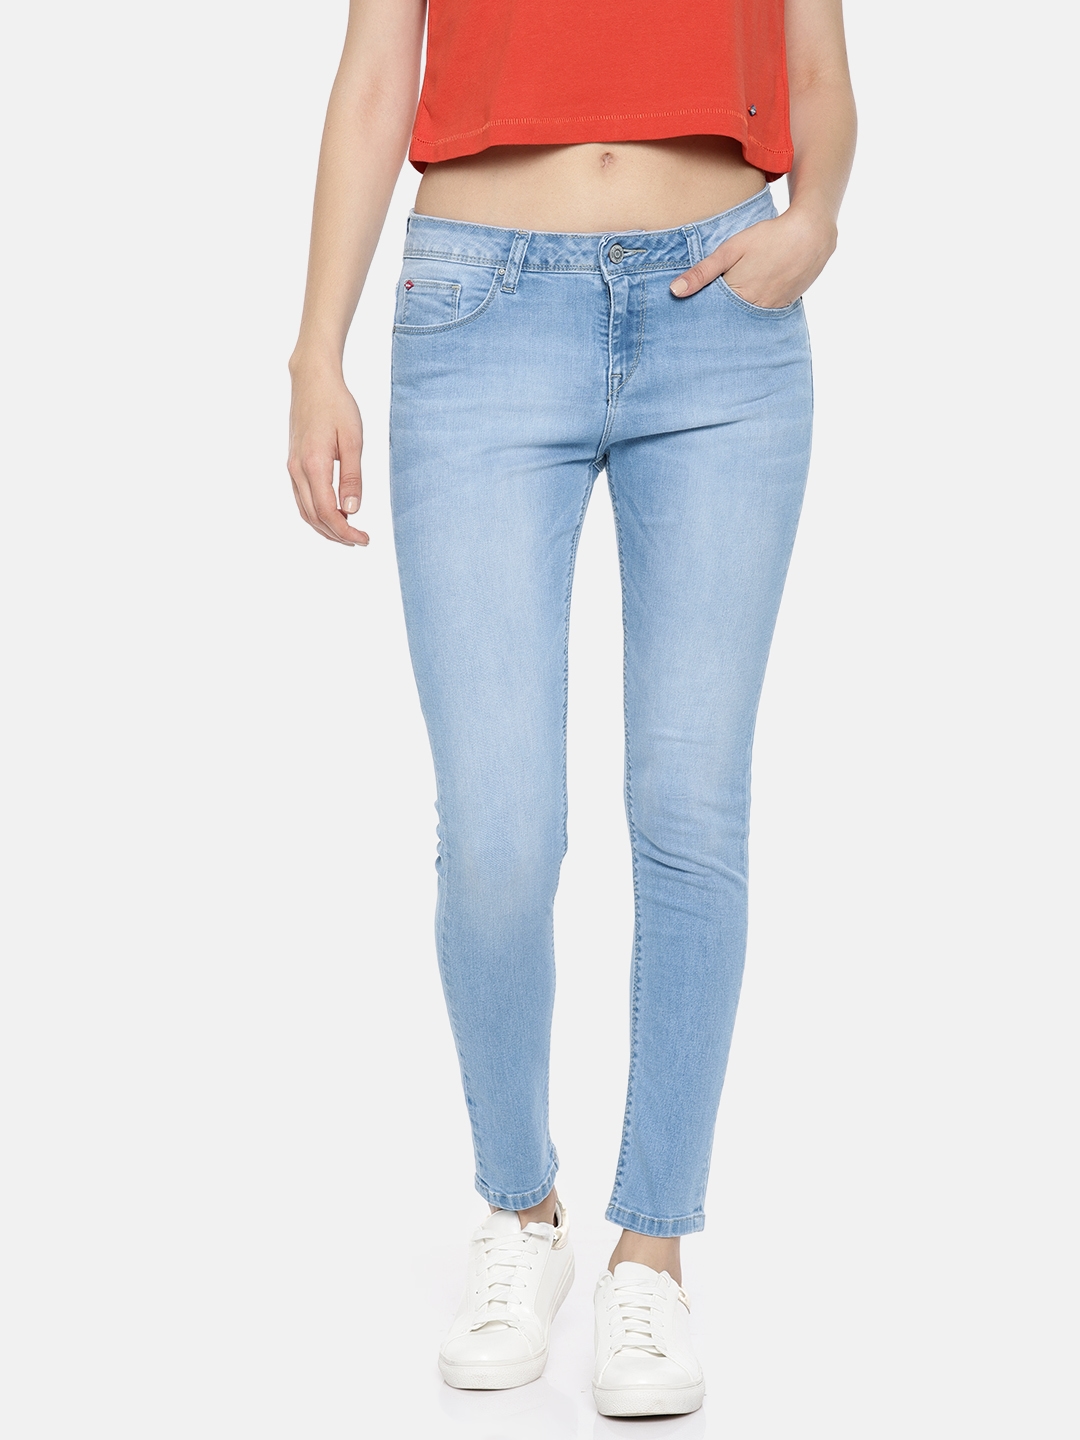 lee cooper annie jeans online -